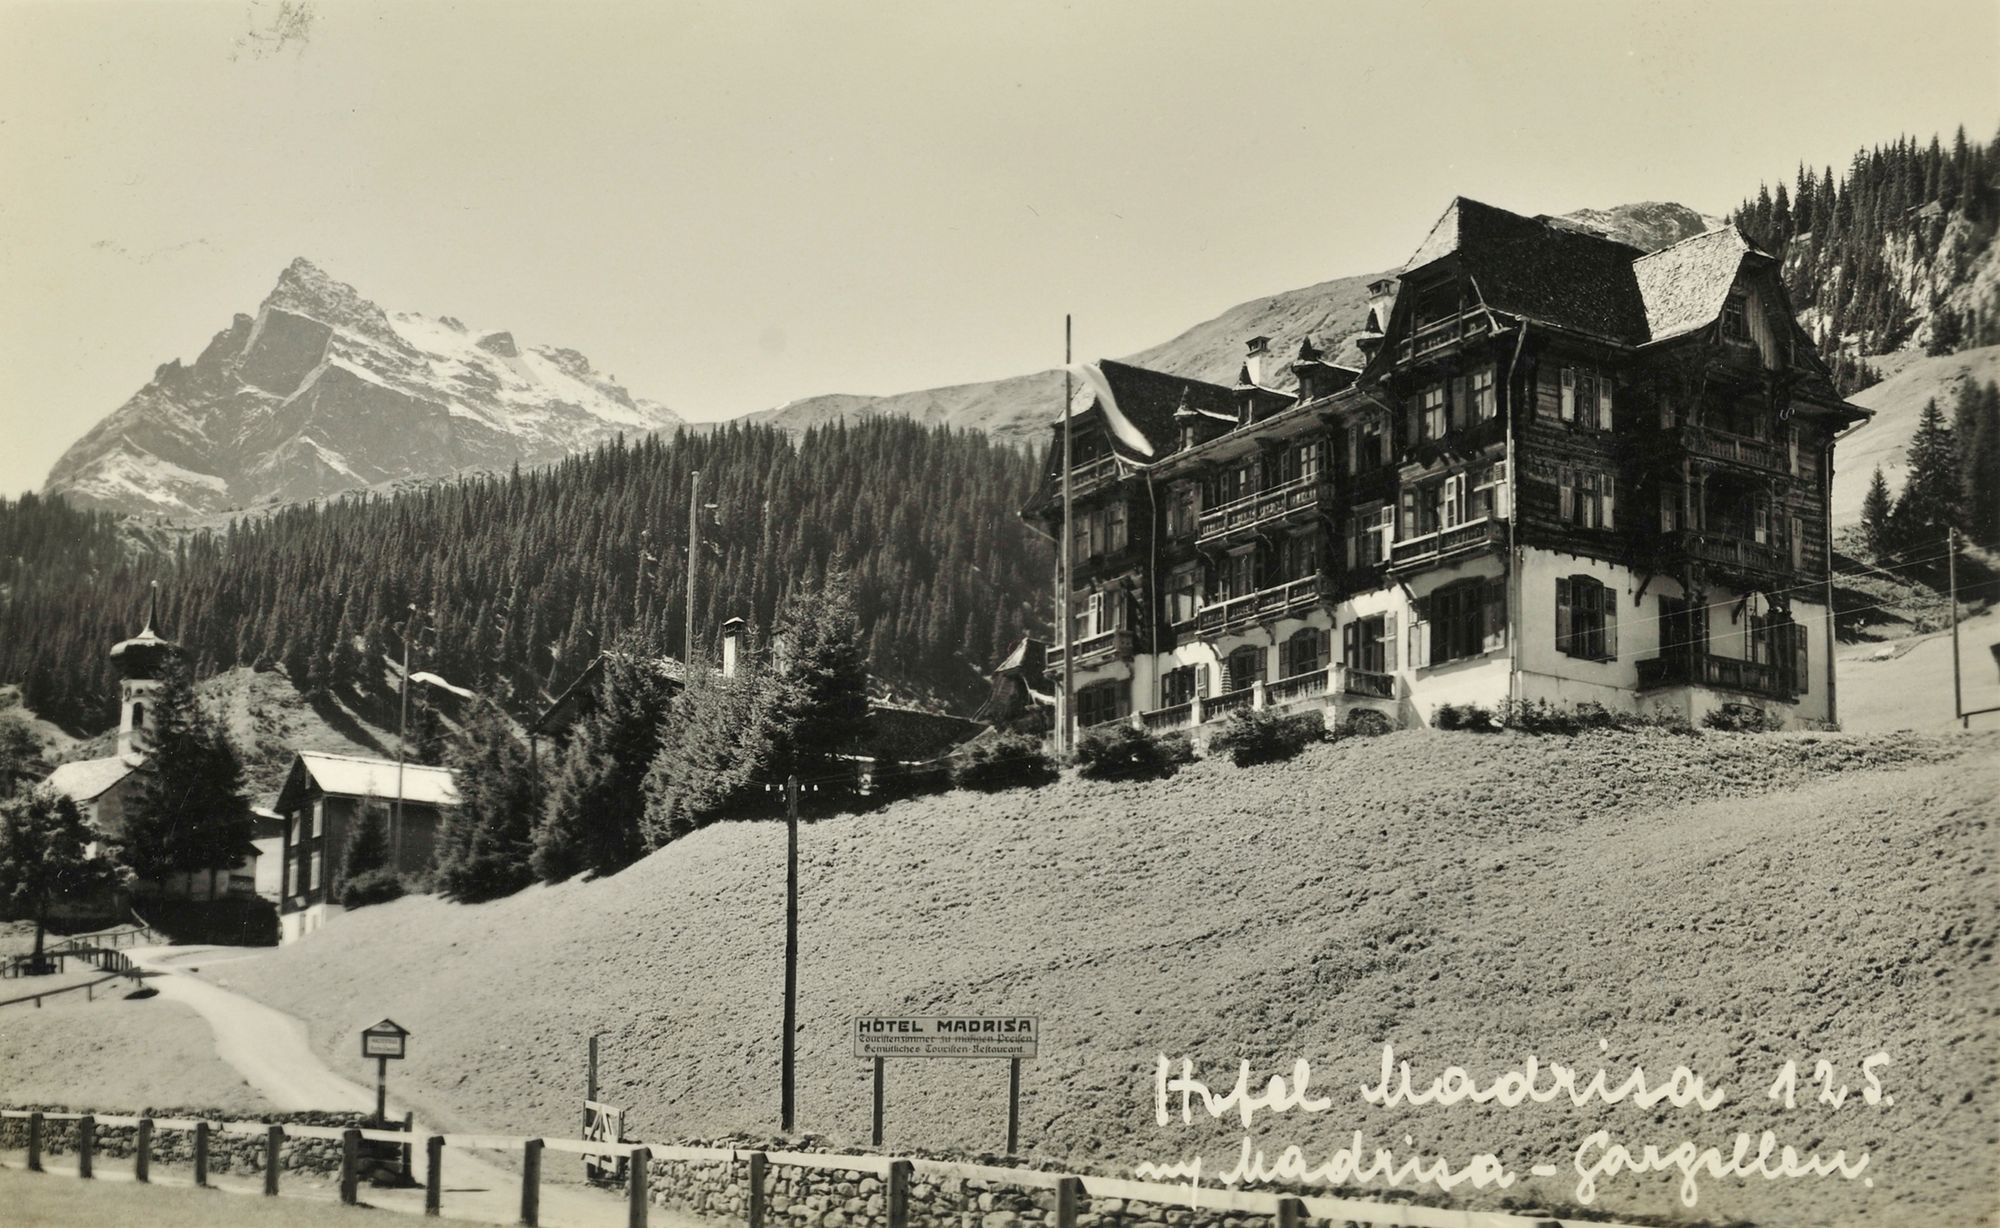 Hotel Madrisa – 4* hotel in Gargellen, Montafon, AustriaOur Story ...